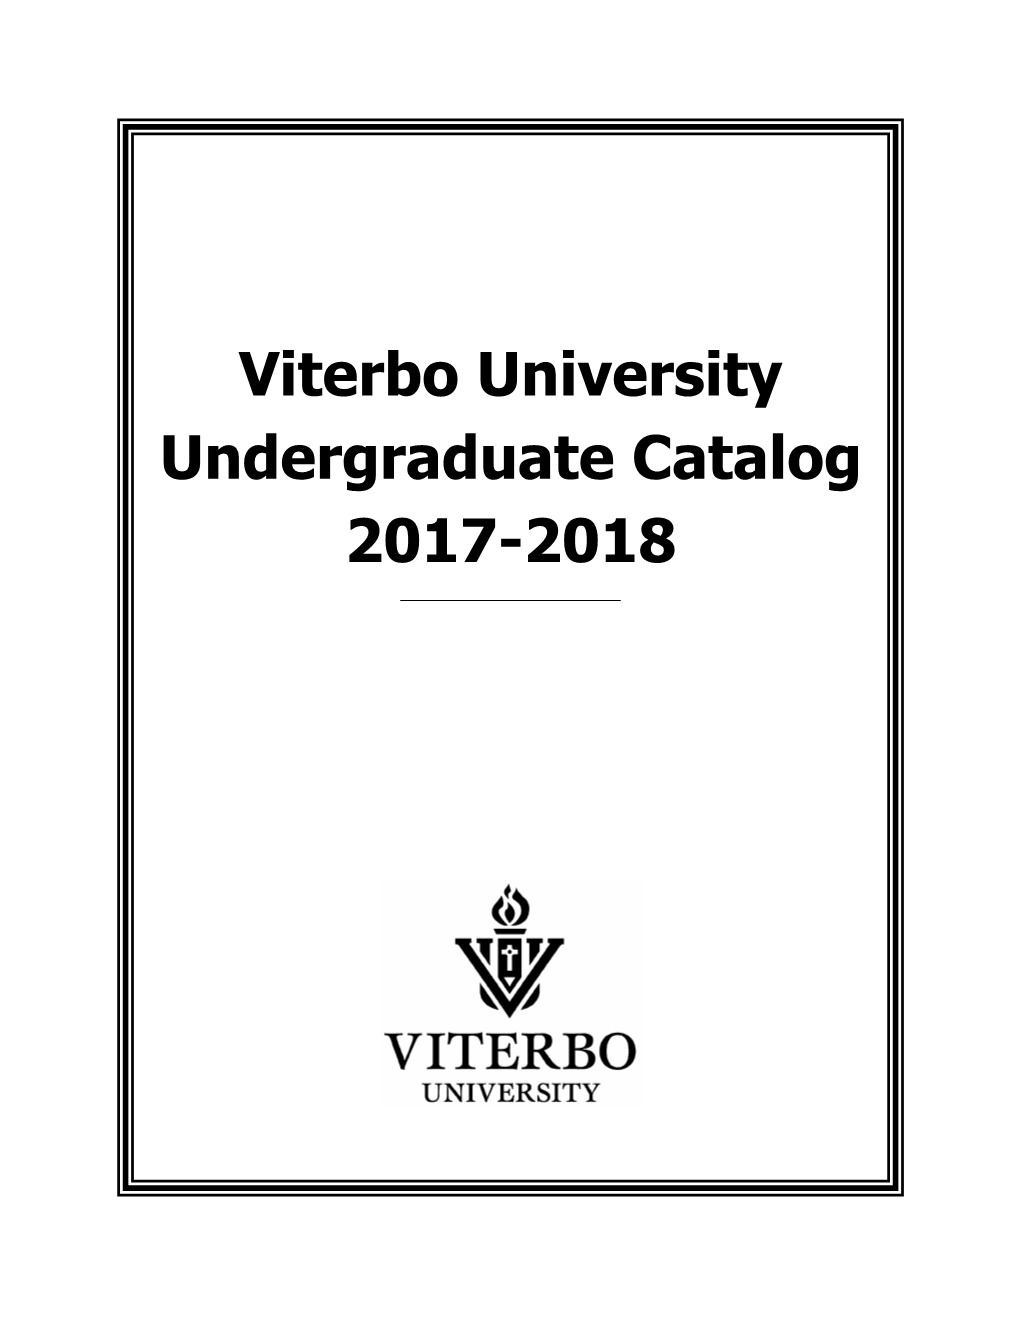 Viterbo University Undergraduate Catalog 2017-2018